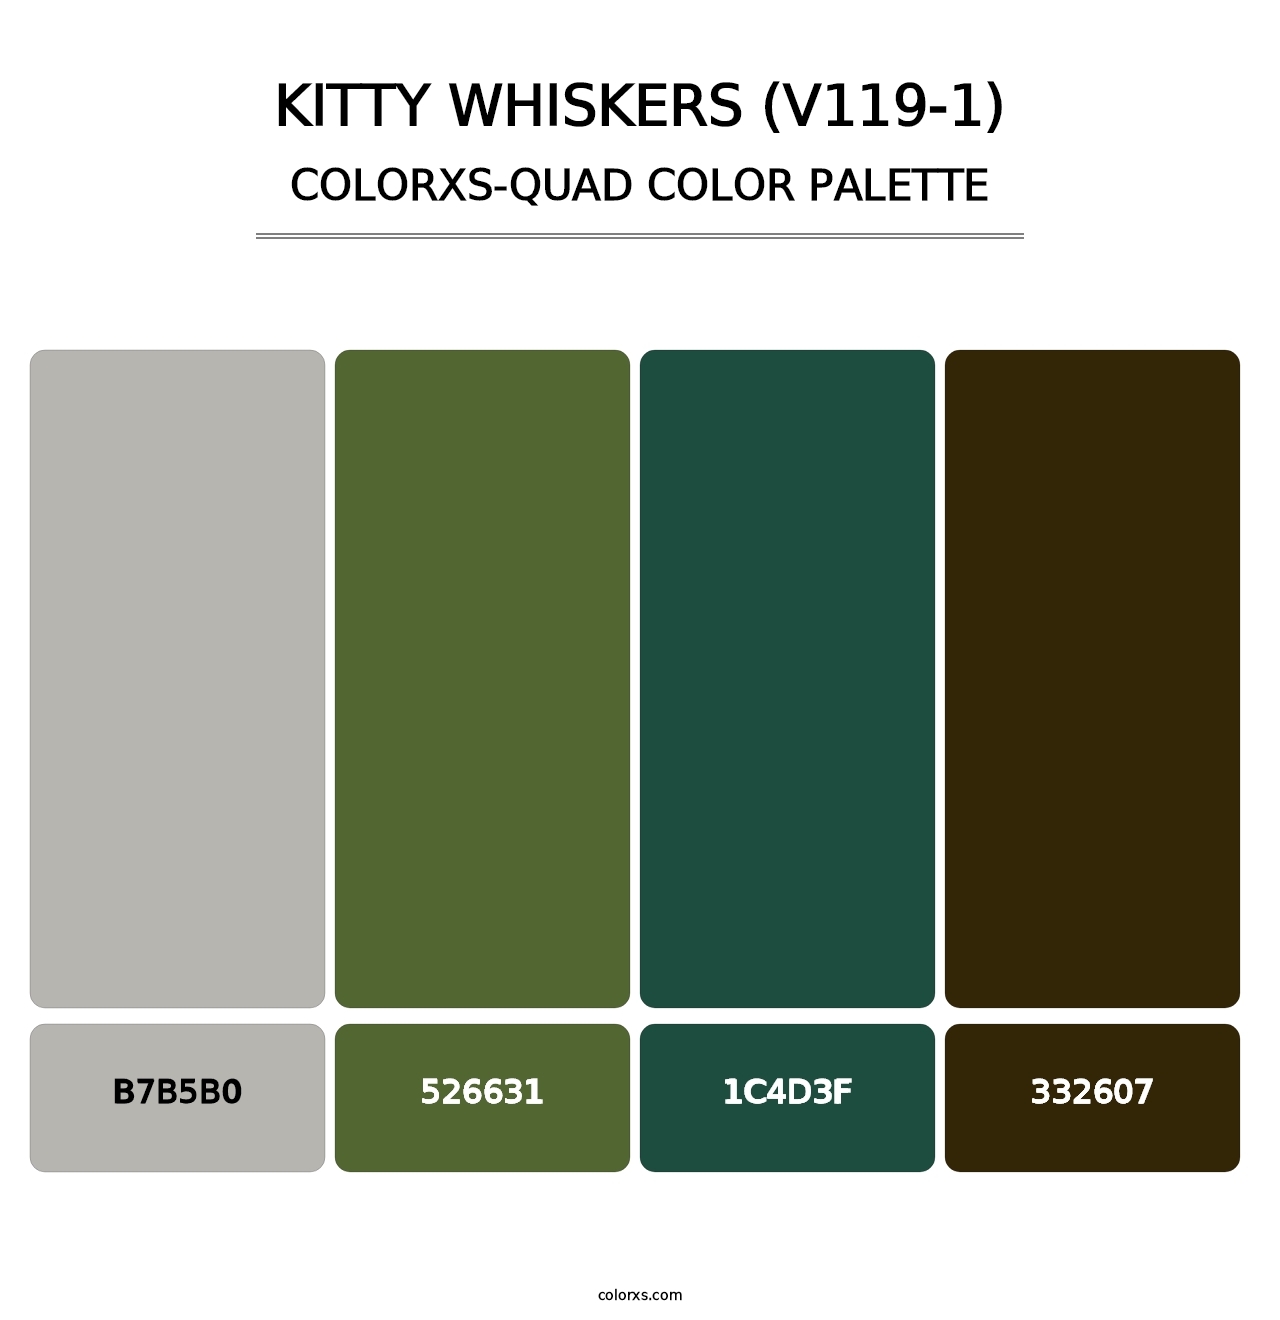 Kitty Whiskers (V119-1) - Colorxs Quad Palette